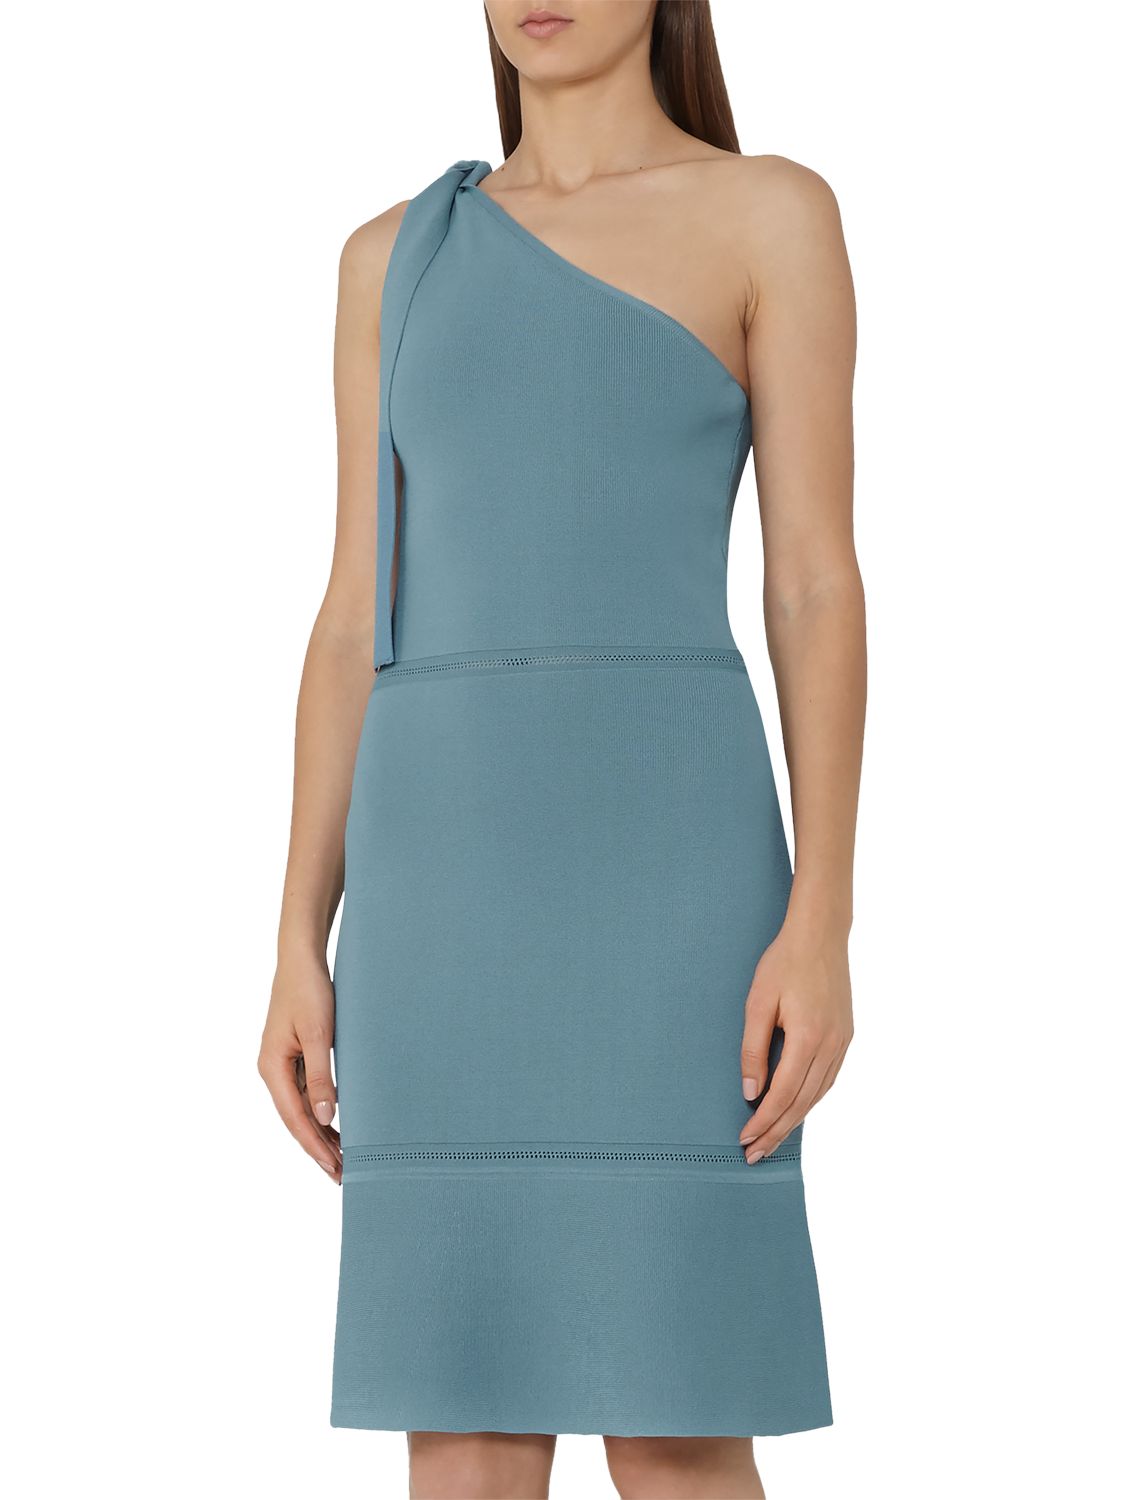 Reiss One Shoulder Knit Dress, Blue at John Lewis & Partners